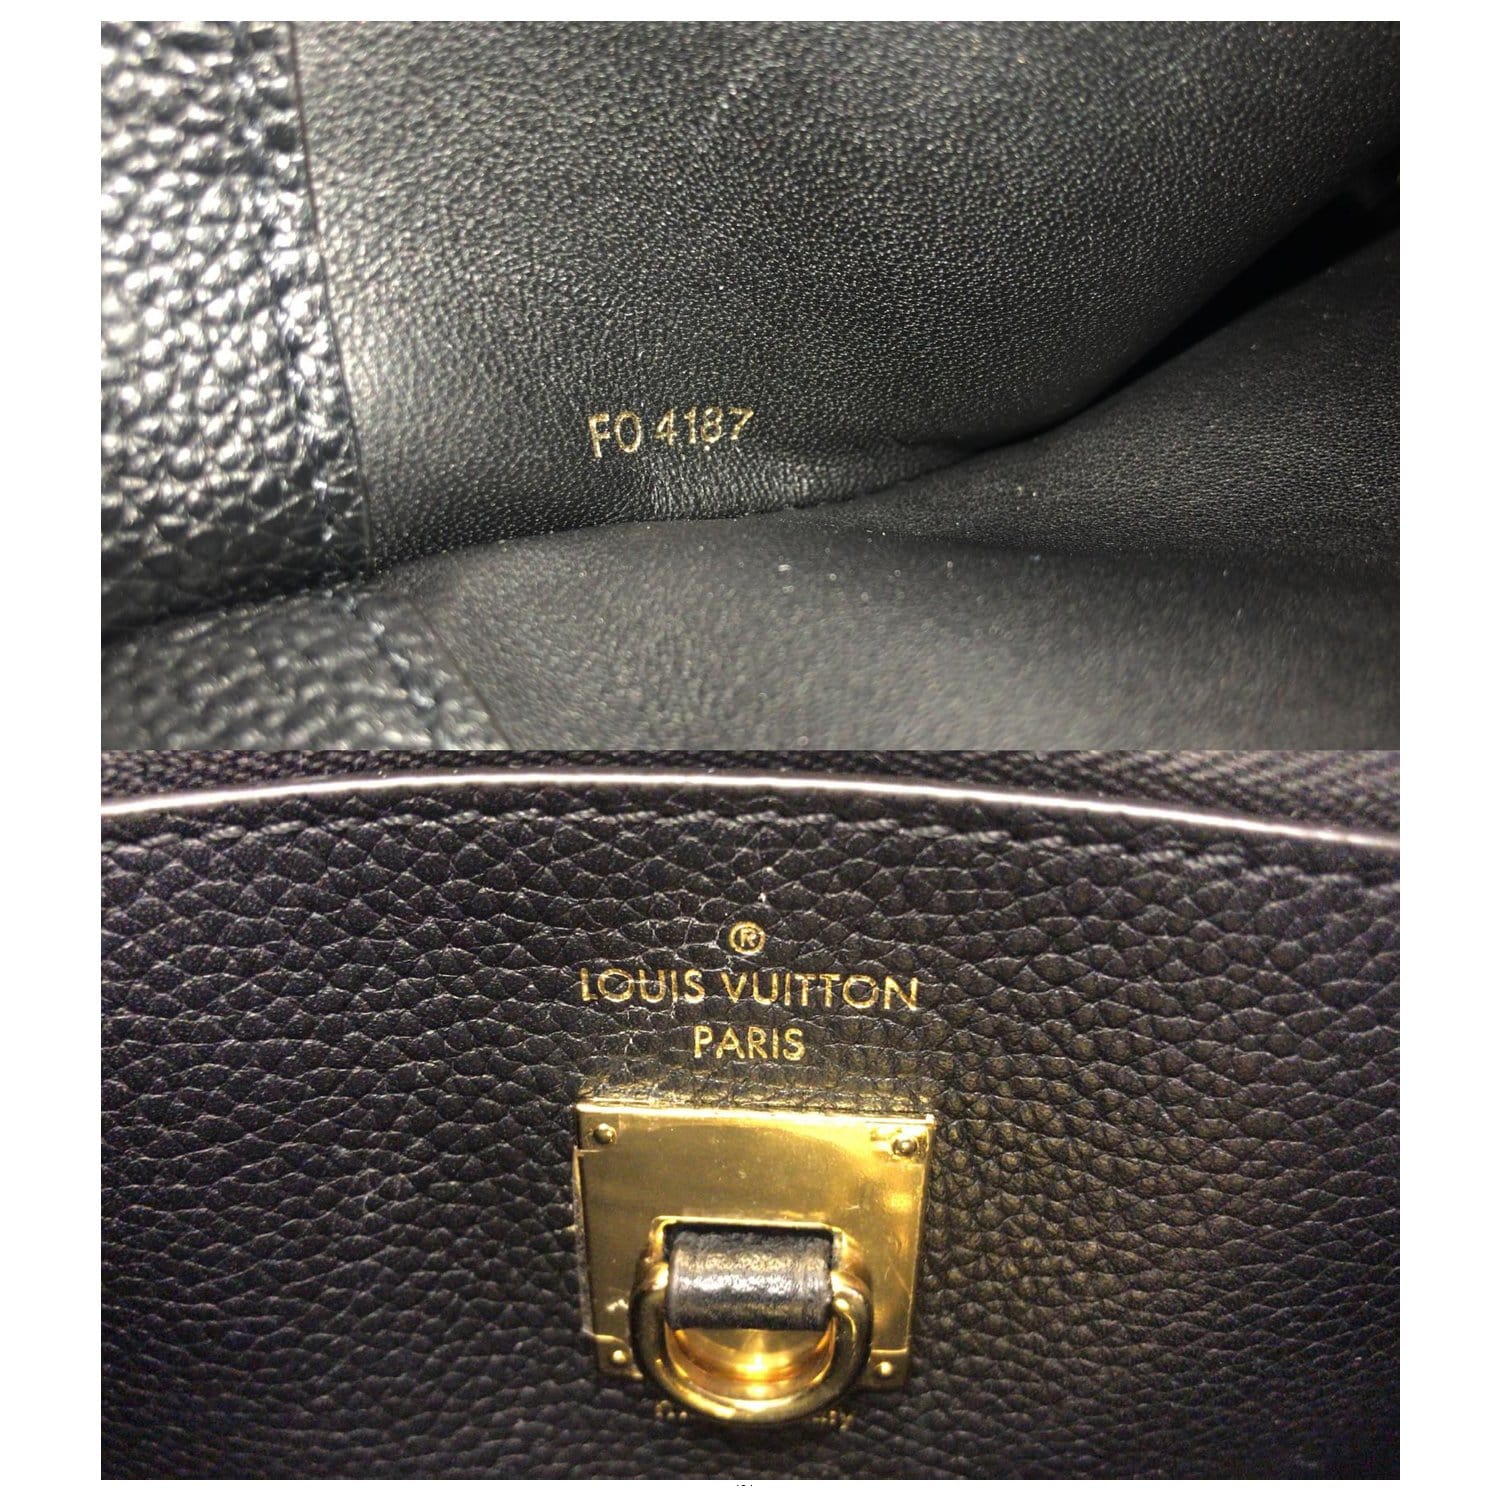 Louis Vuitton Taurillon City Steamer MM - Black Handle Bags